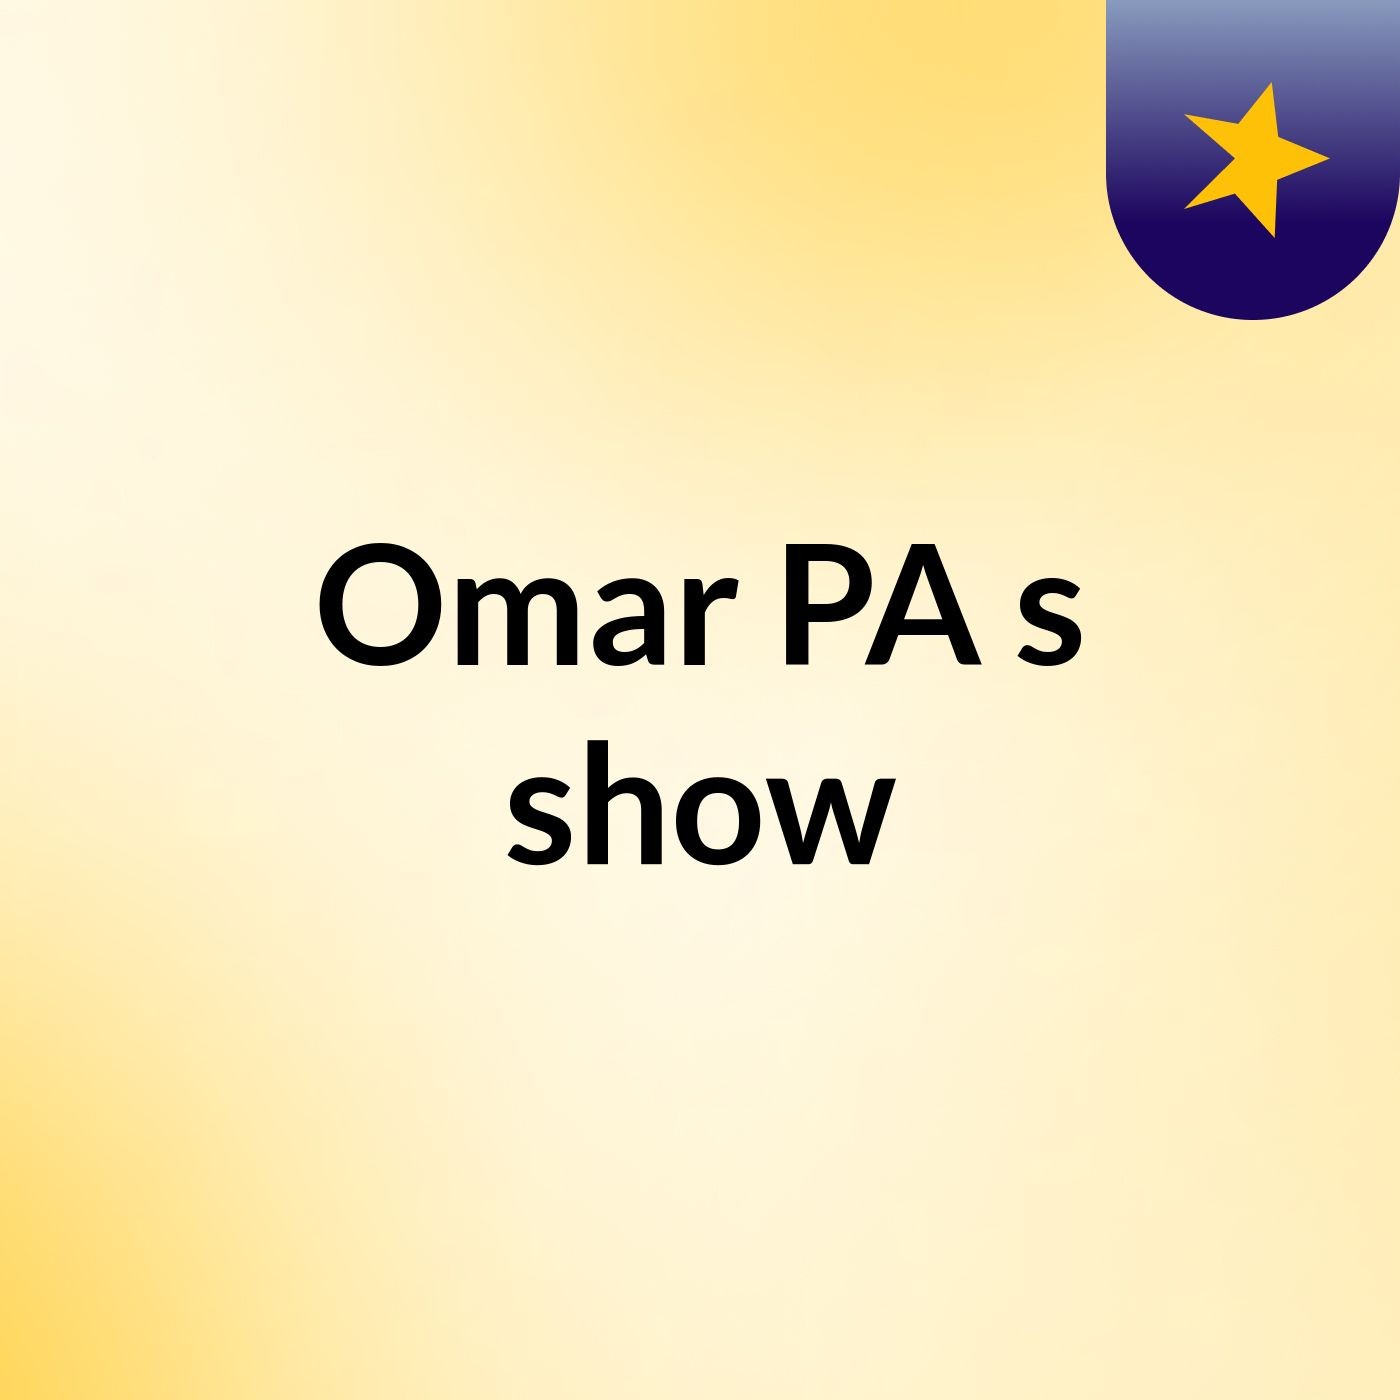 Omar PA's show